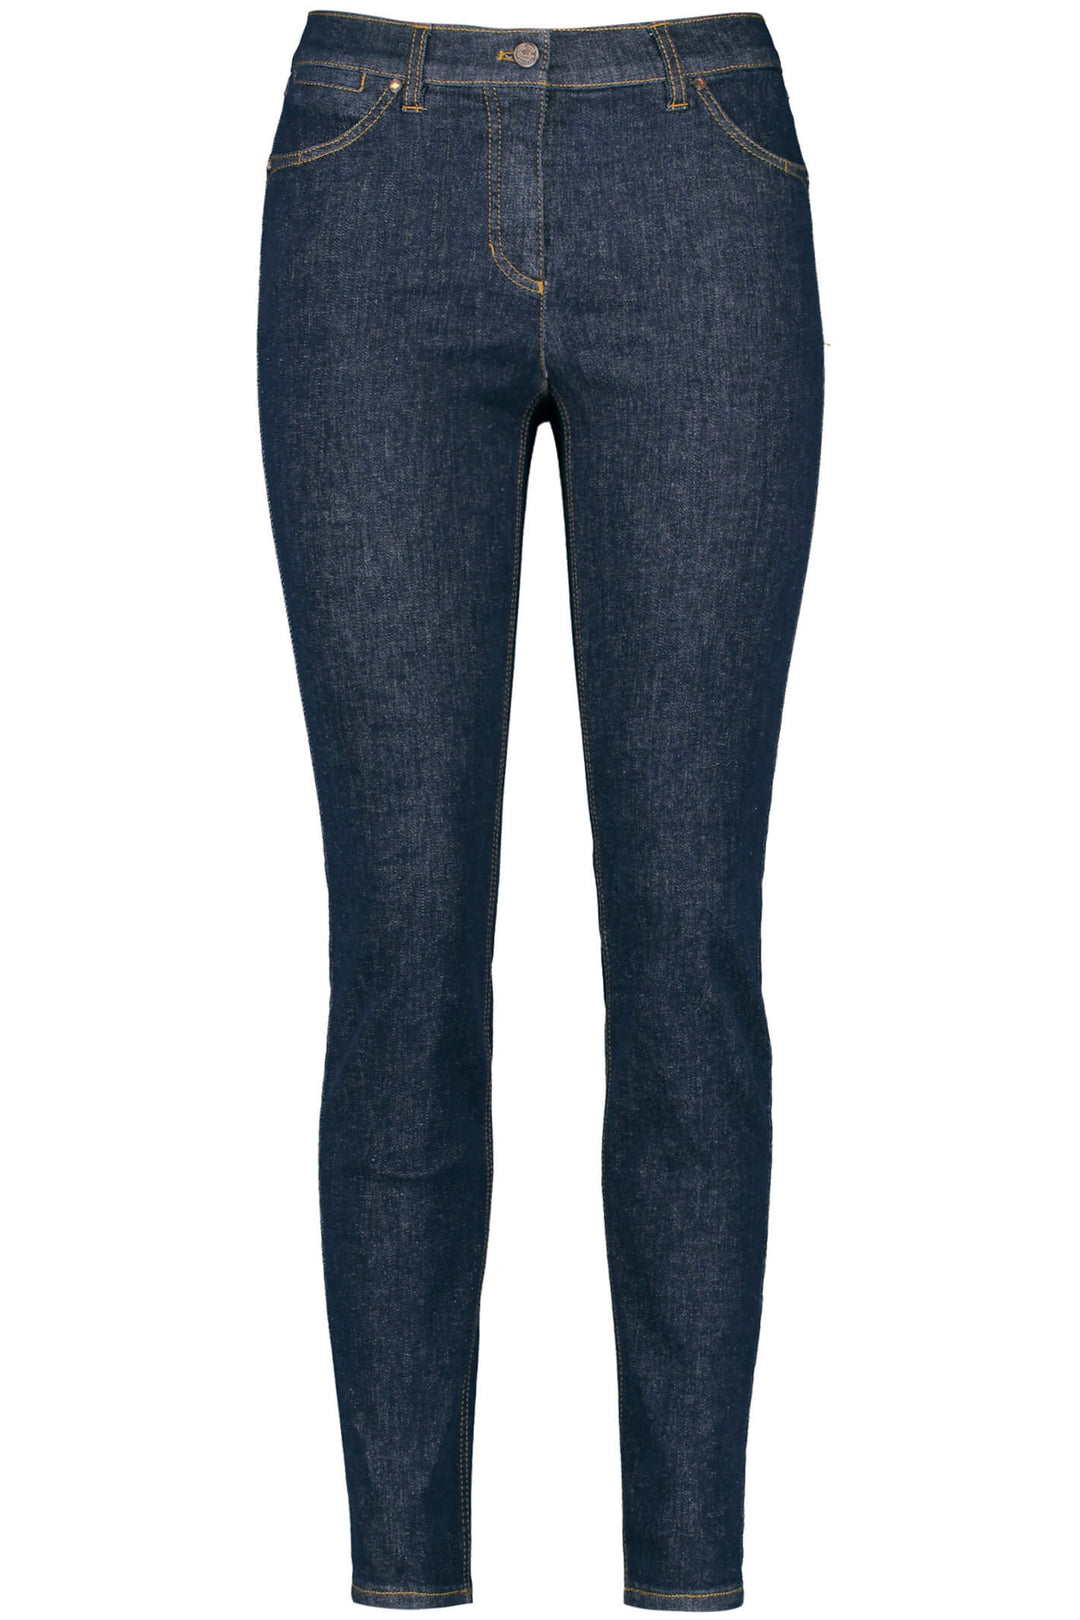 Gerry Weber 92391 Dark Denim Best4me Skinny Jeans - Experience Boutique